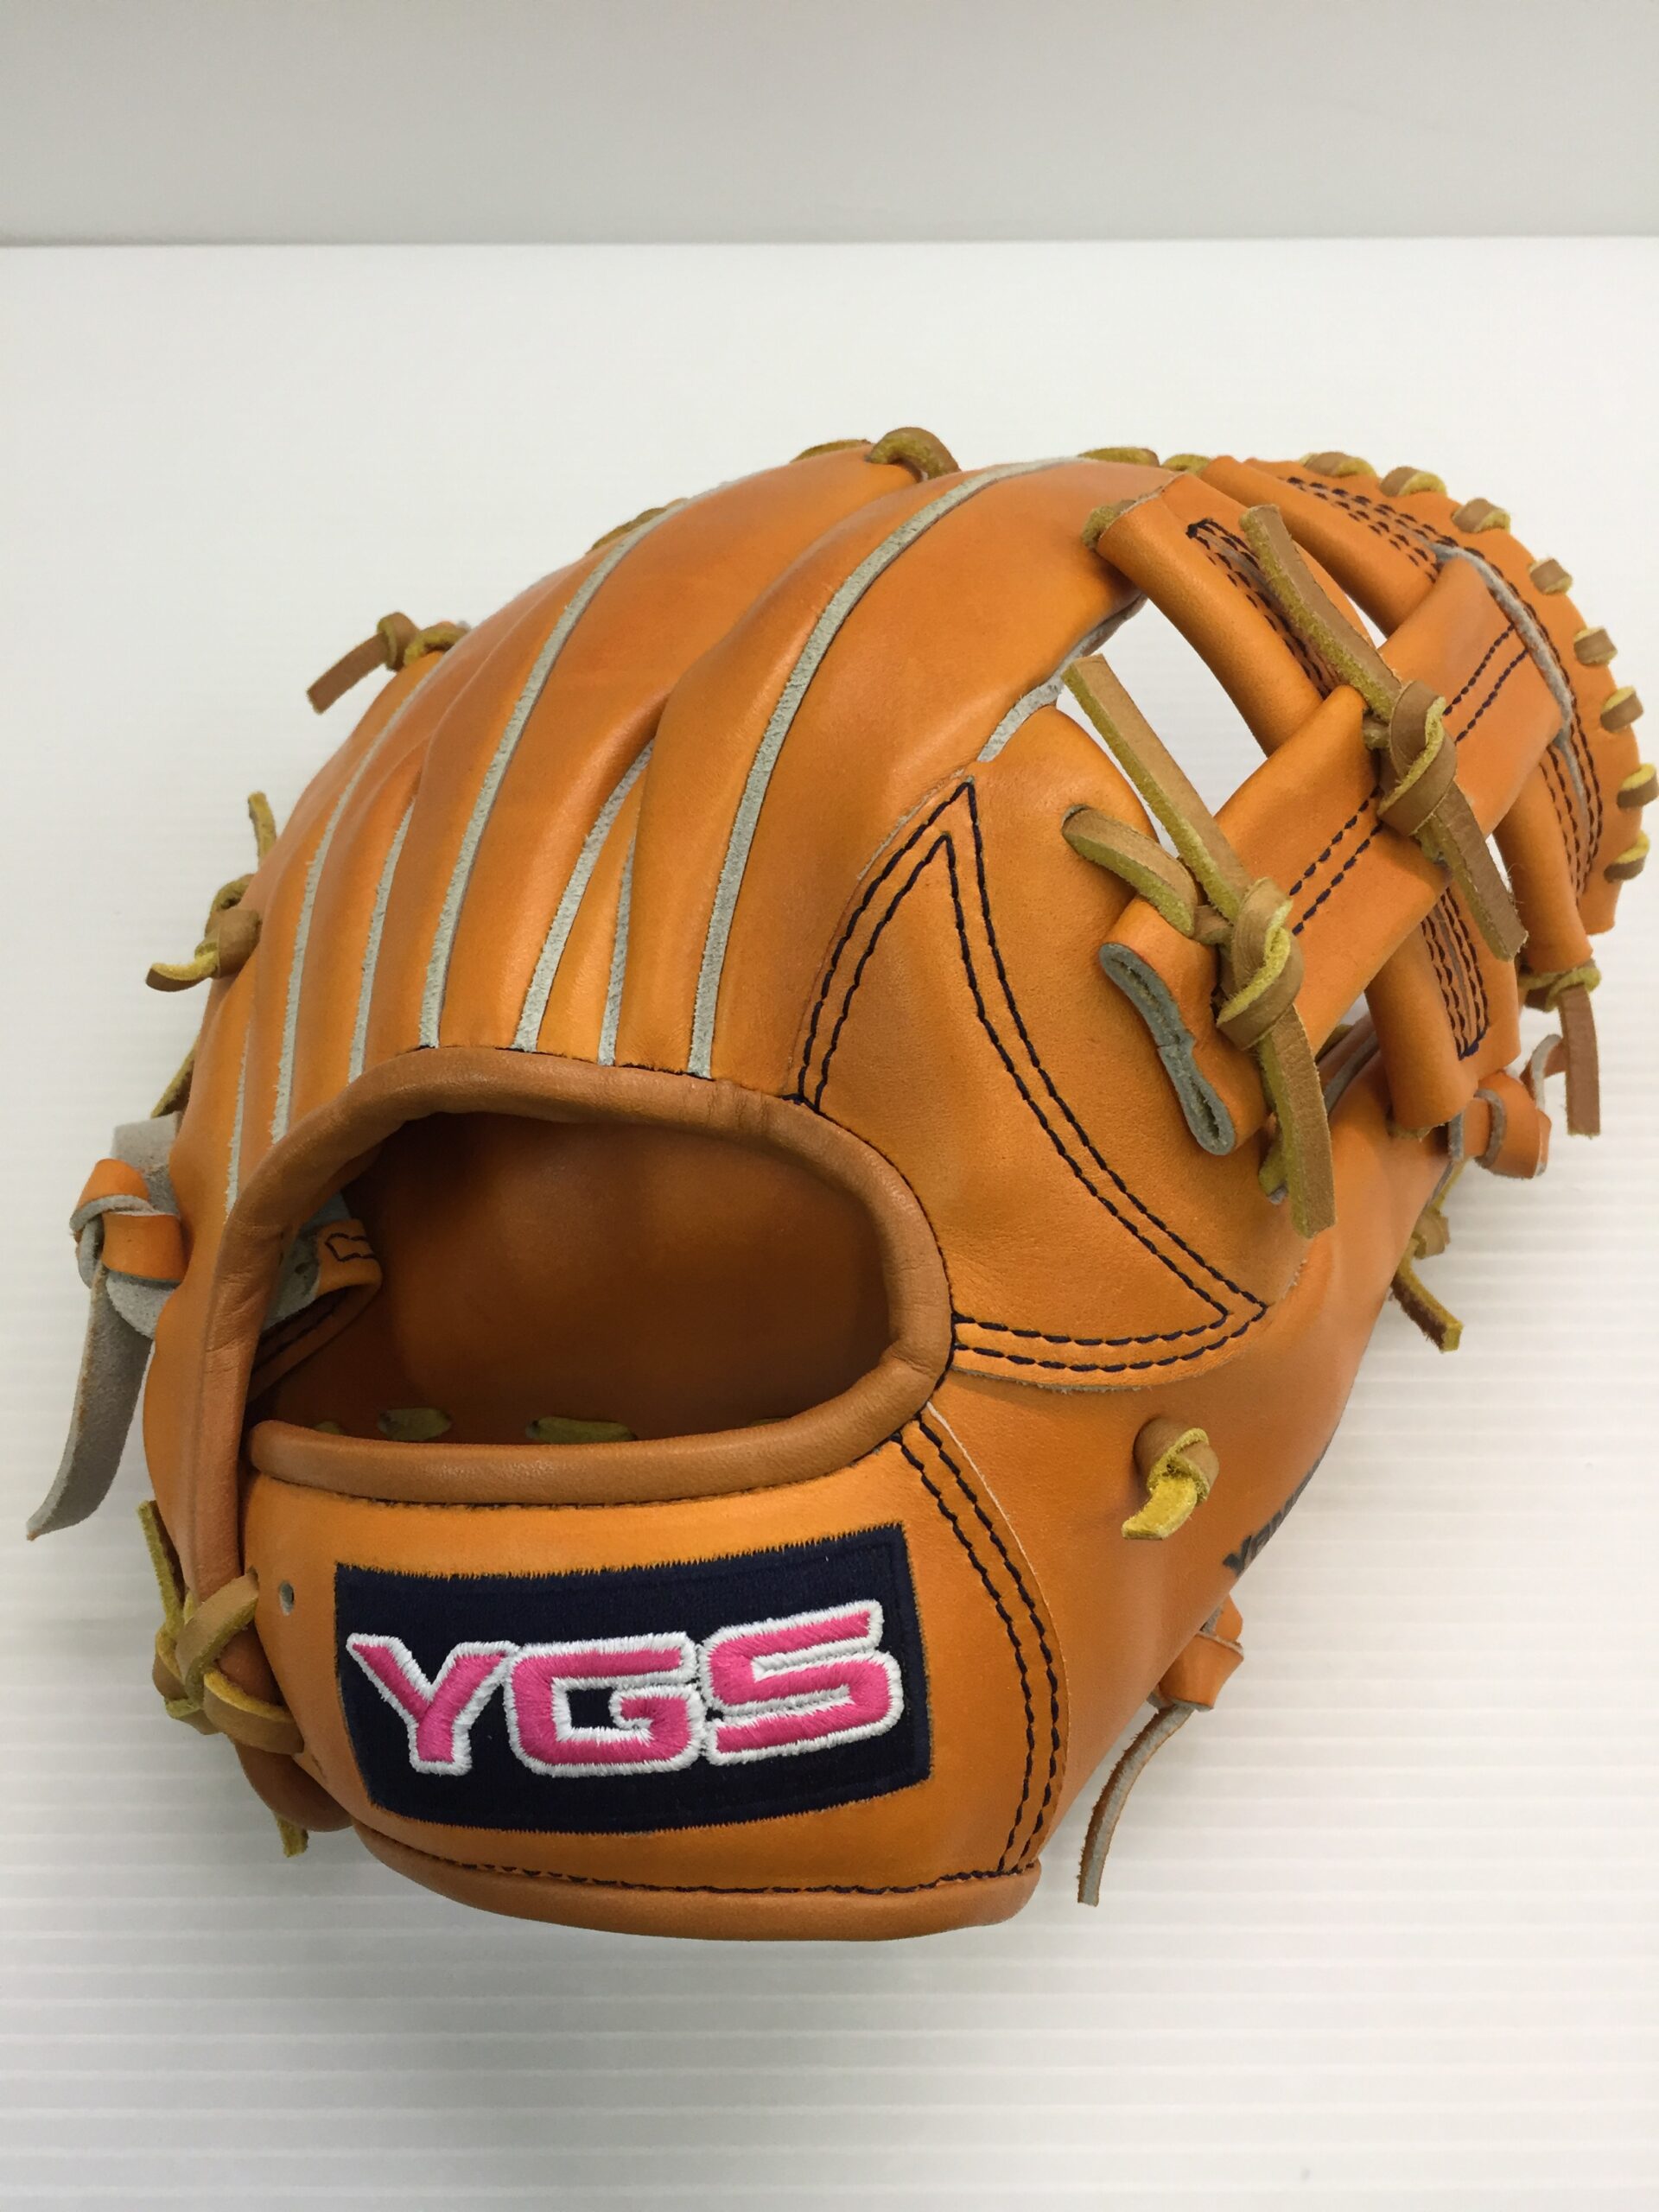 YGS 山本グラブスタジオ 軟式 内野手用 グローブ YI17 - 野球グローブ